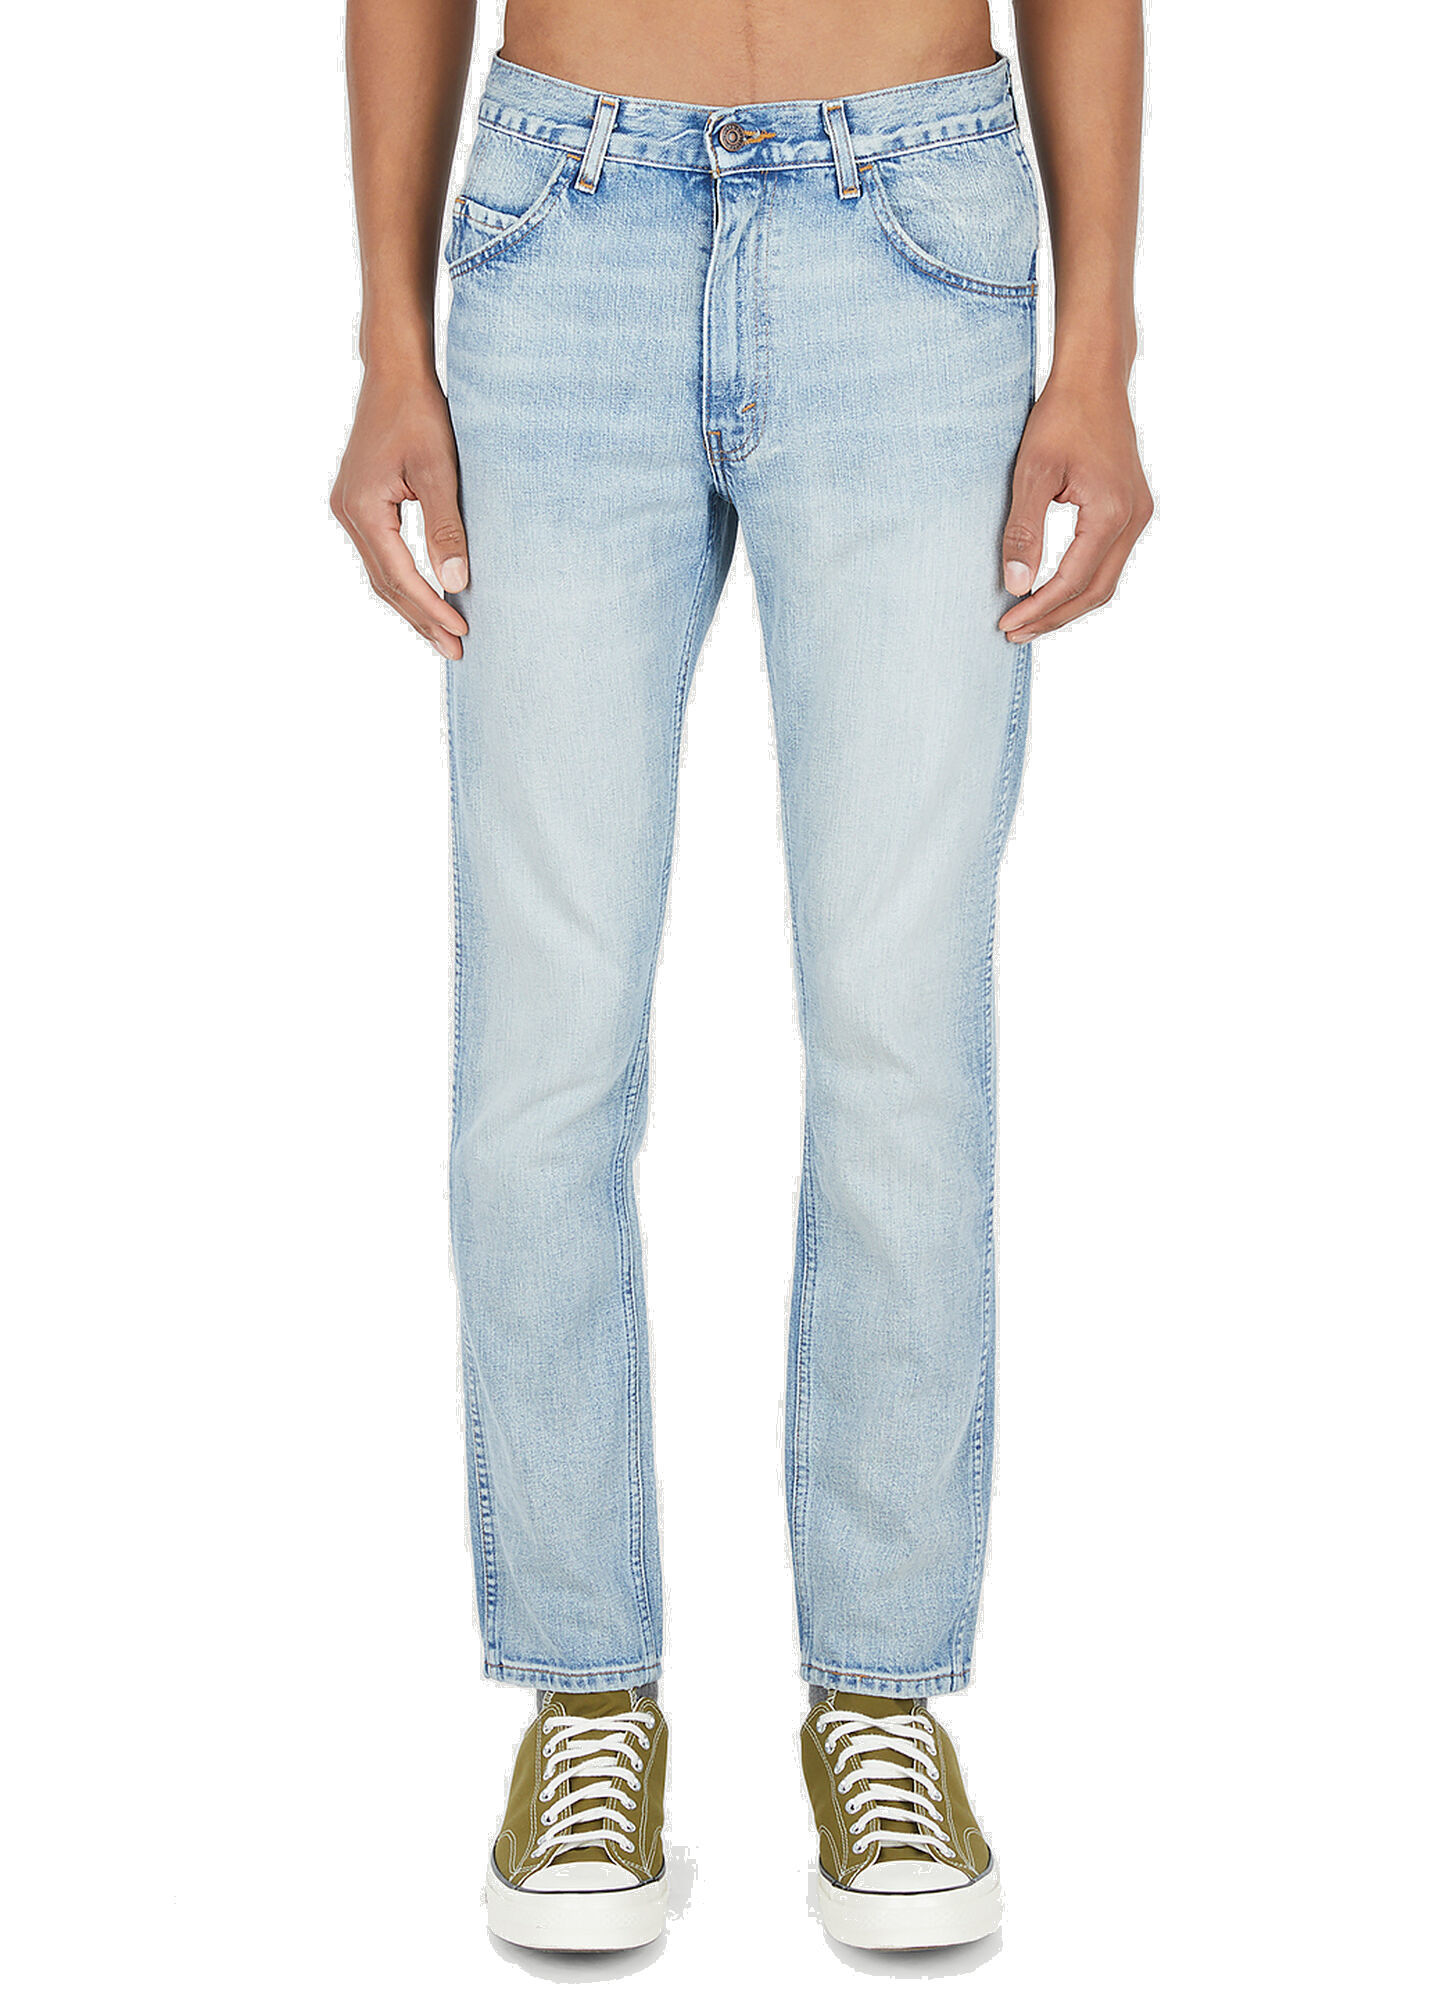 Wide Open Jeans in Blue Levi's Vintage